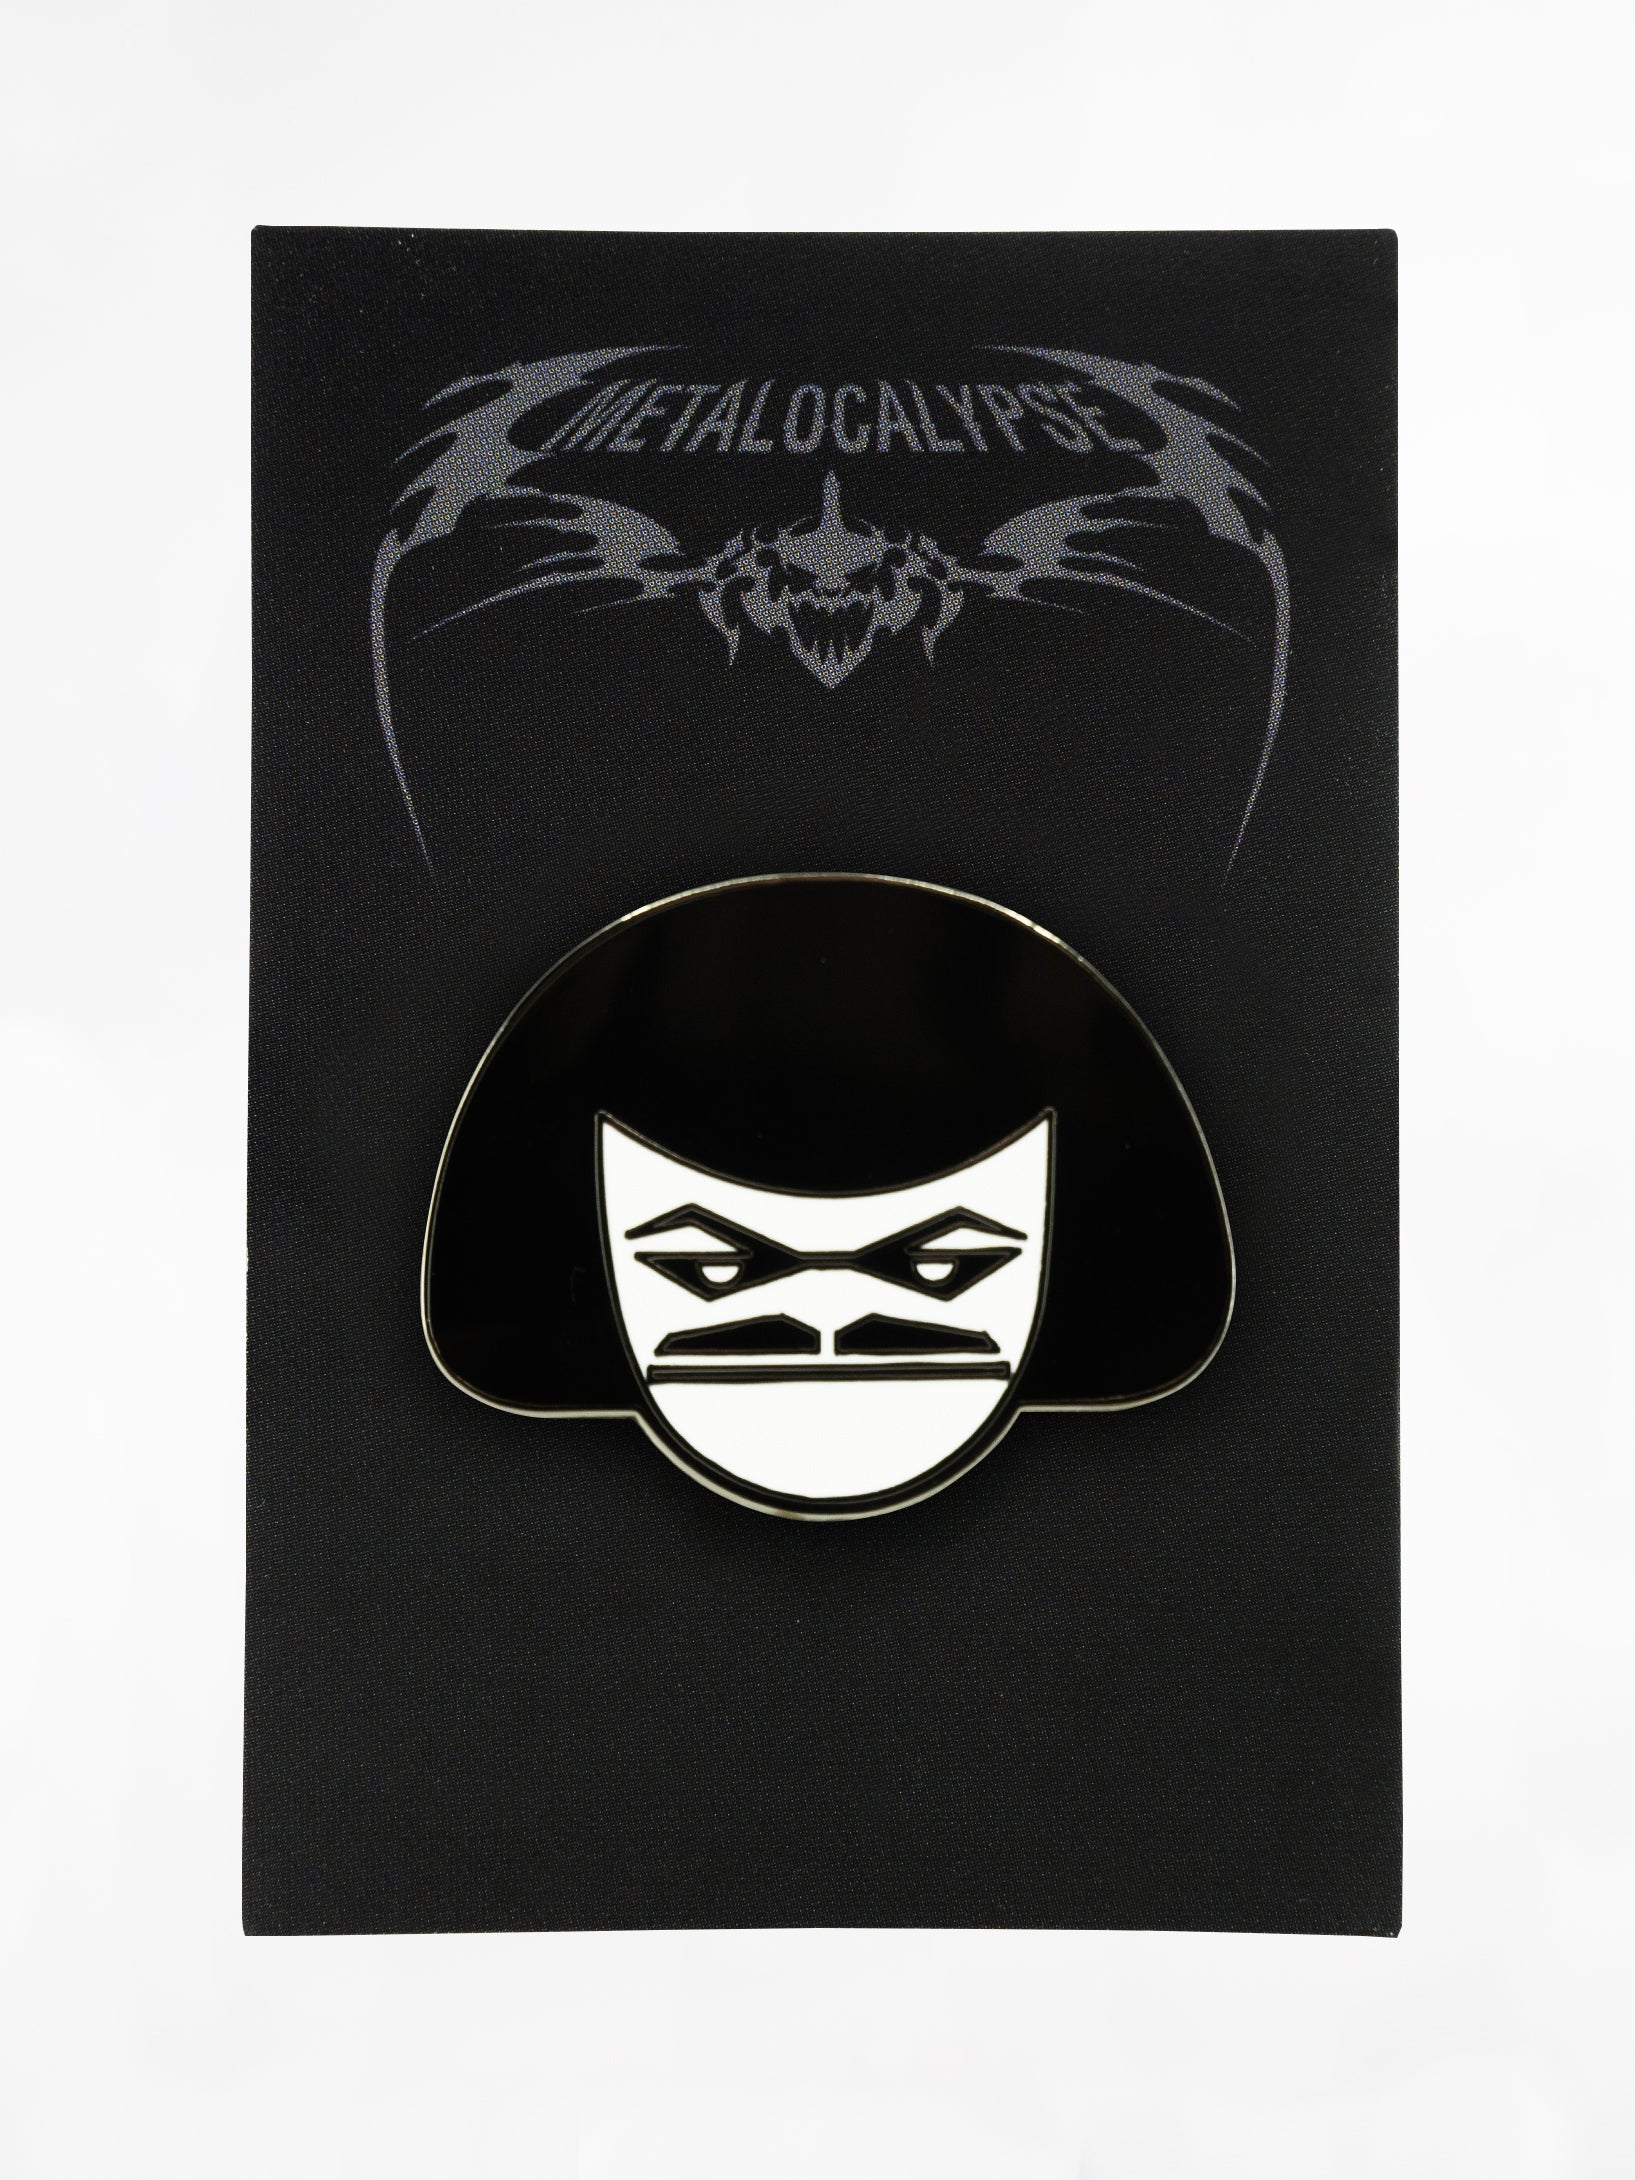 Metalocalypse Enamel Pin - Murderface by Titmouse on backing card